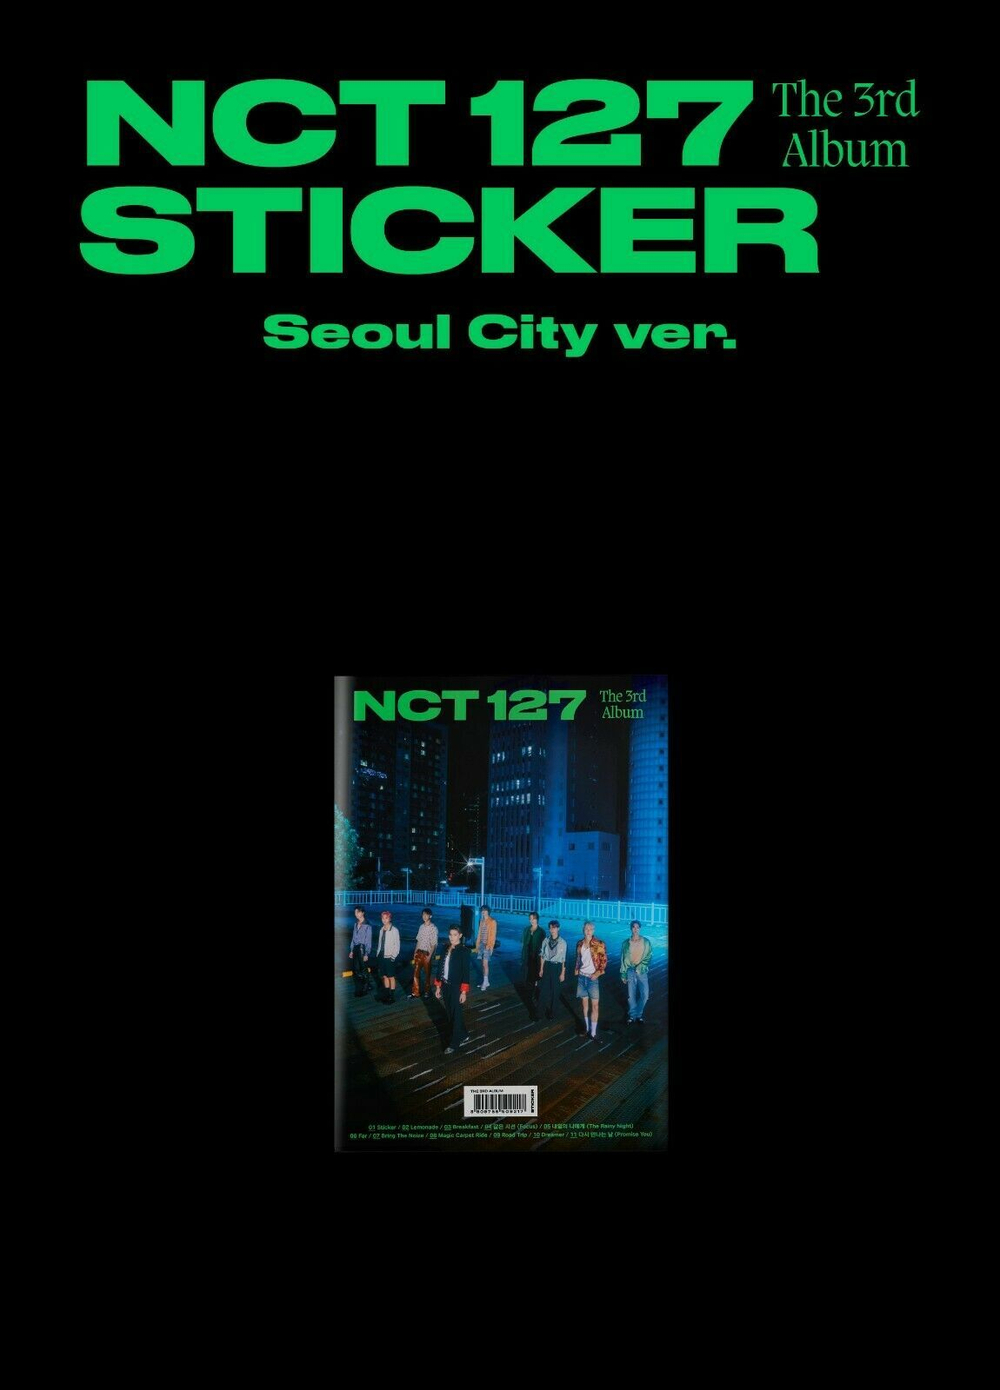 NCT 127 - Sticker [Seoul City ver.]